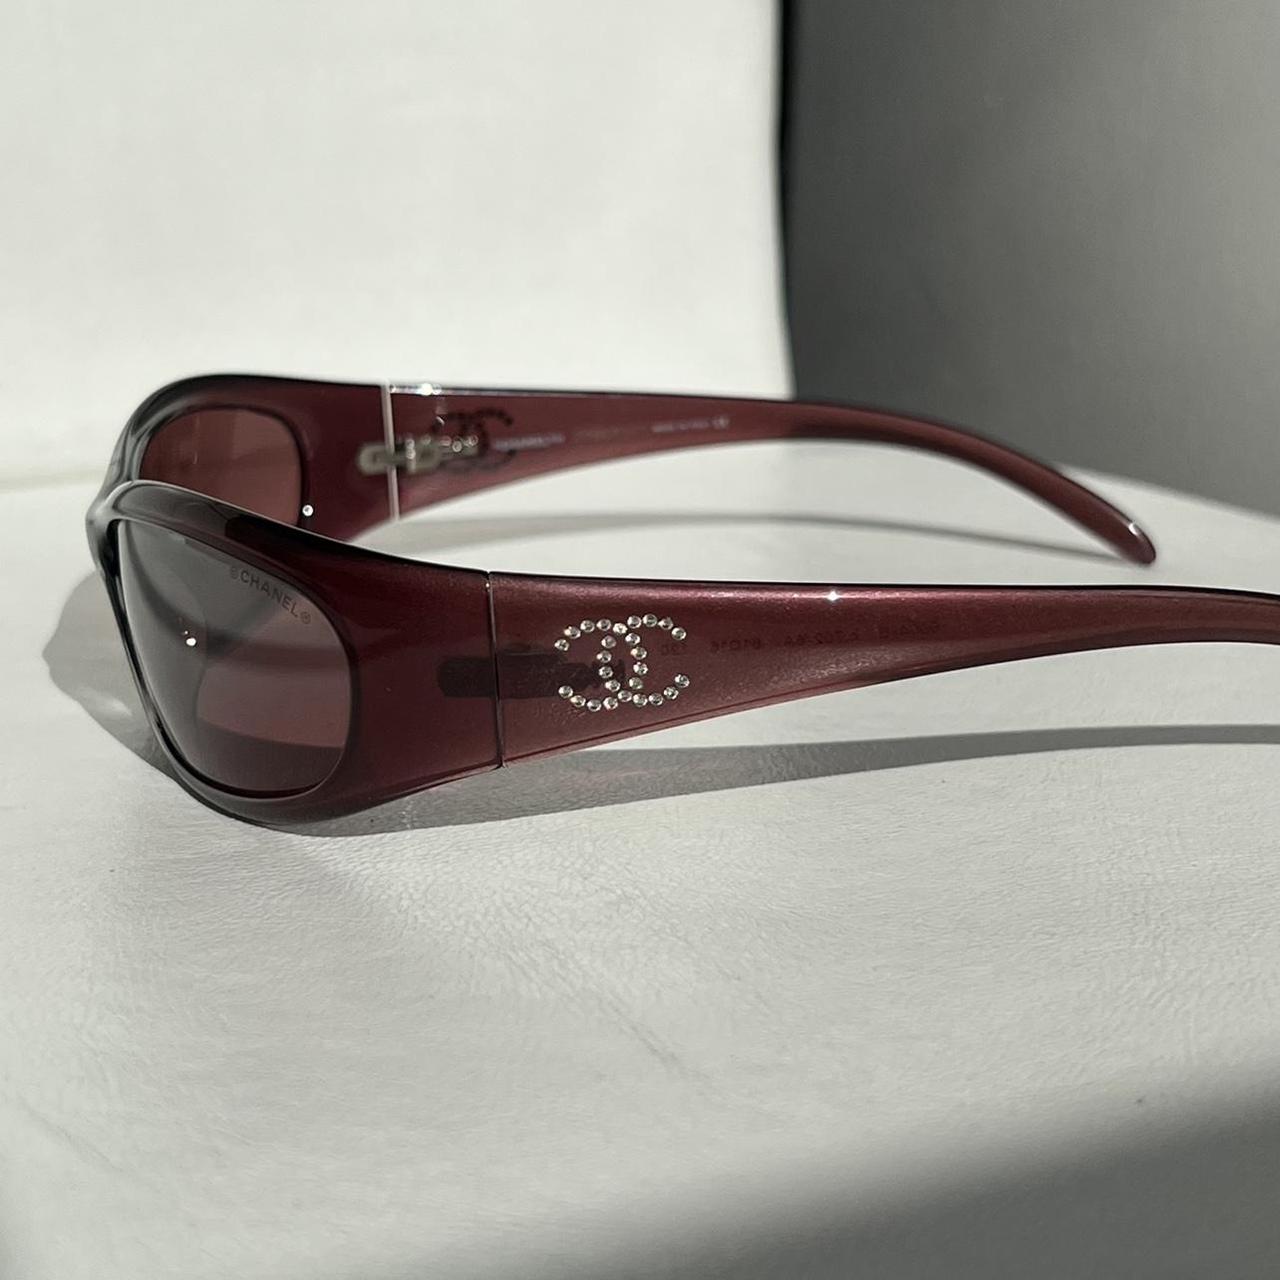 Original vintage chanel sunglasses 9/10 condition - Depop